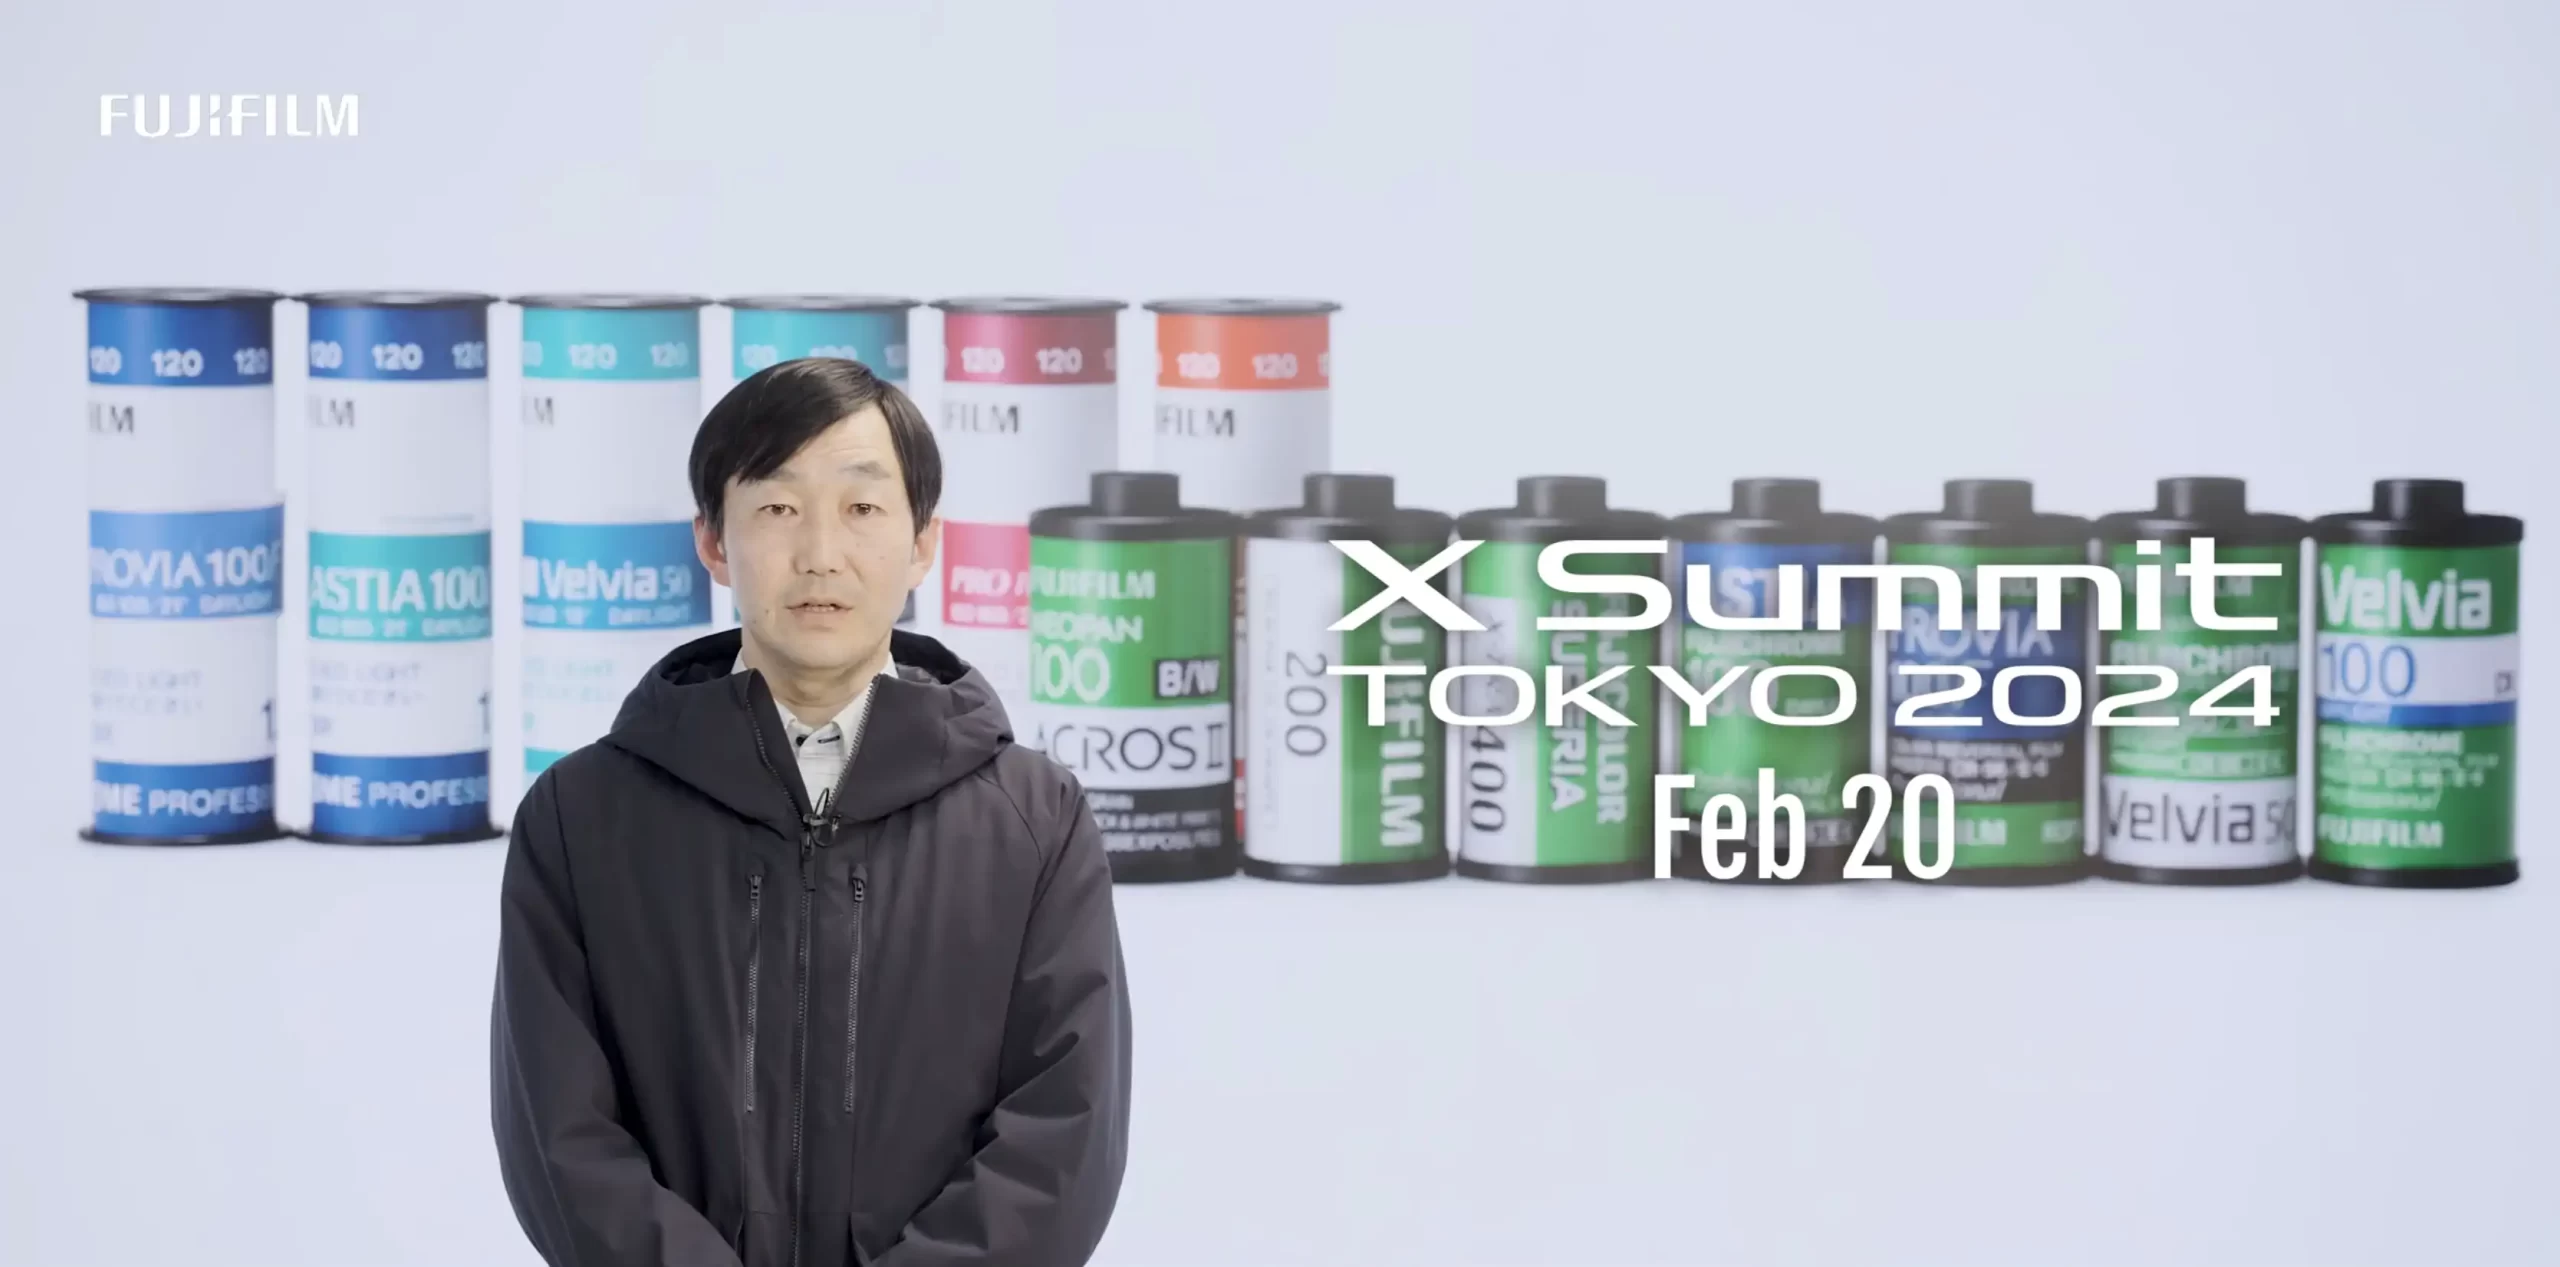 Fujifilm New Year Greeting 2024 Fujifilm X Summit Tokyo February 20